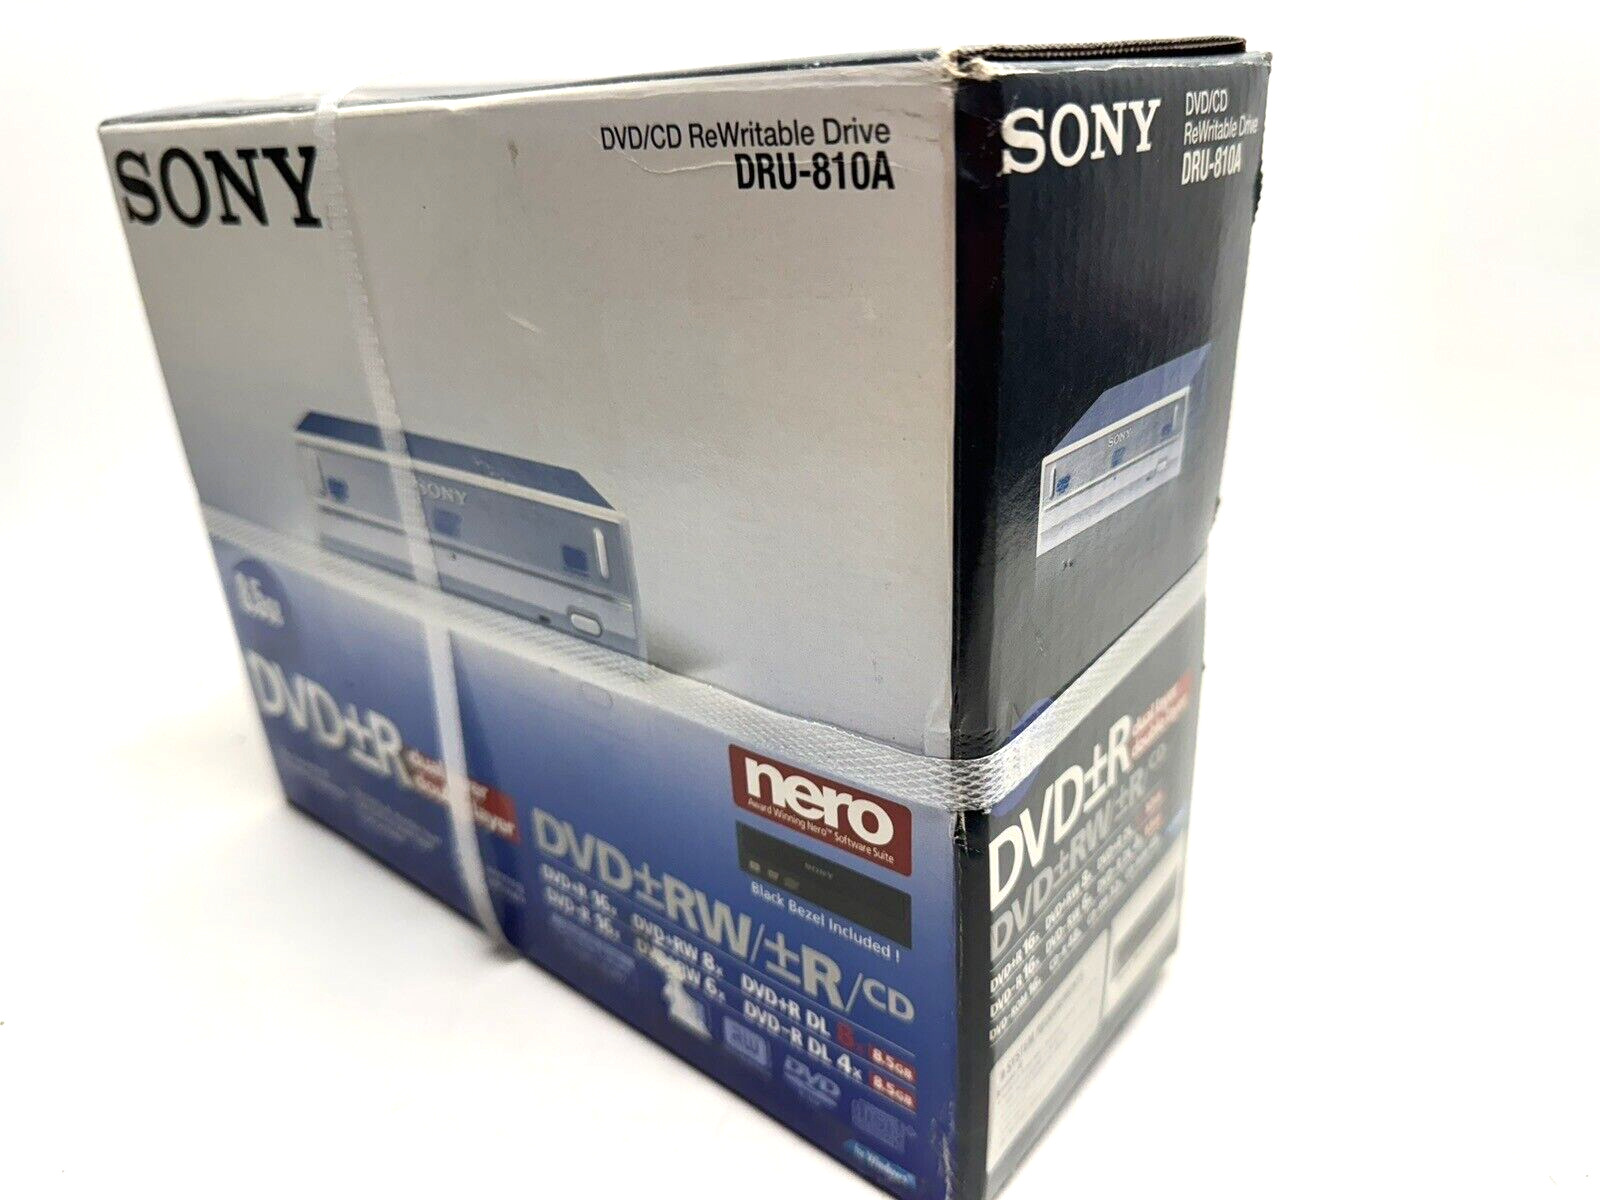 VINTAGE FACTORY SEALED SONY DRU-810A-R DVD/CD DUAL LAYER REWRITABLE DRIVE 8.5GB